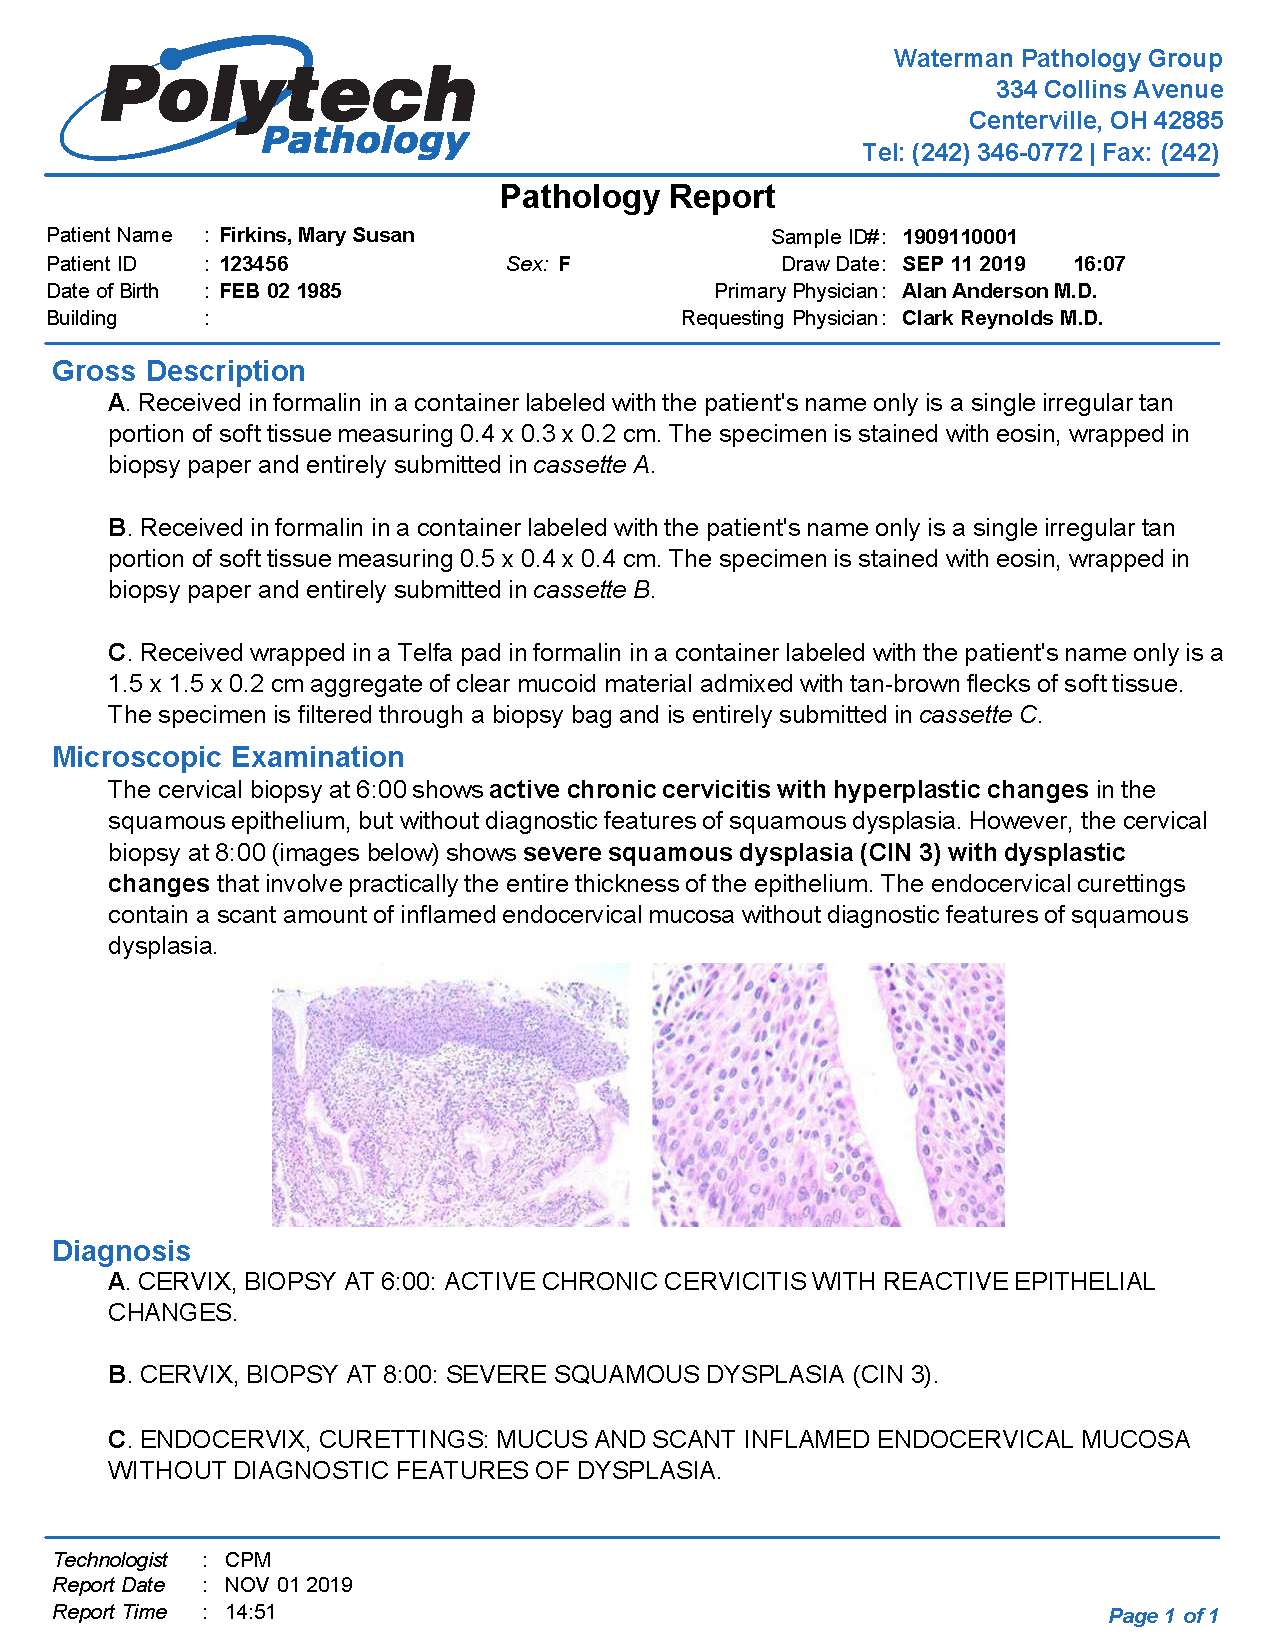 Example Pathology Report